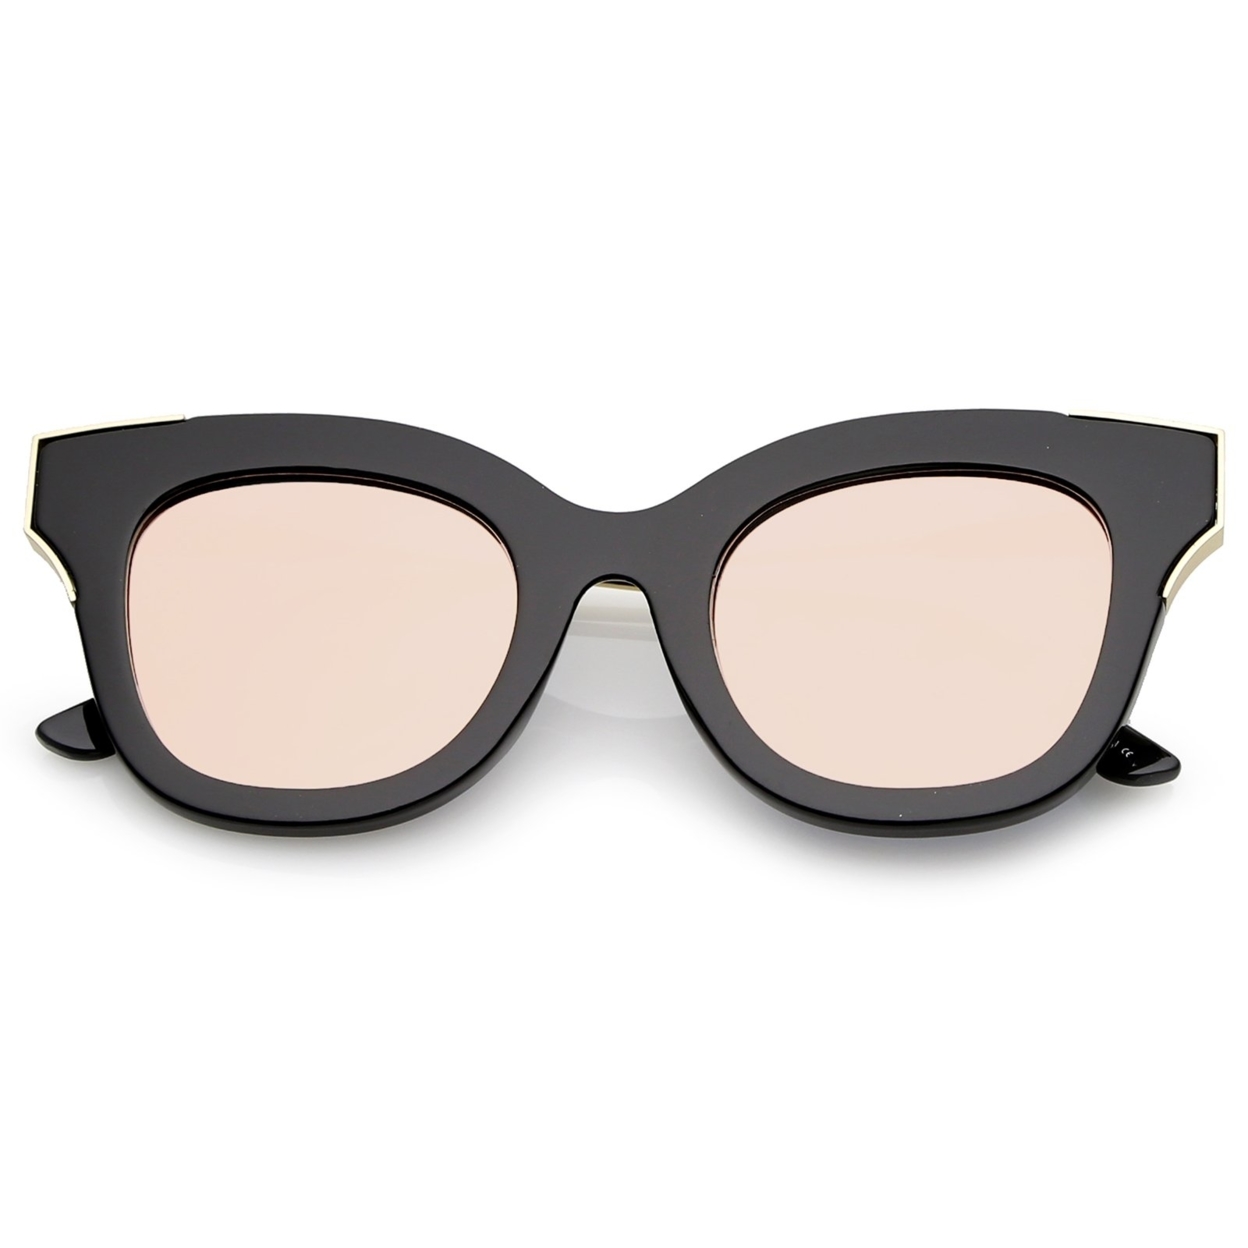 Oversize Slim Temple Metal Square Mirrored Flat Lens Cat Eye Sunglasses 48mm - Tortoise-Gold / Magenta Mirror